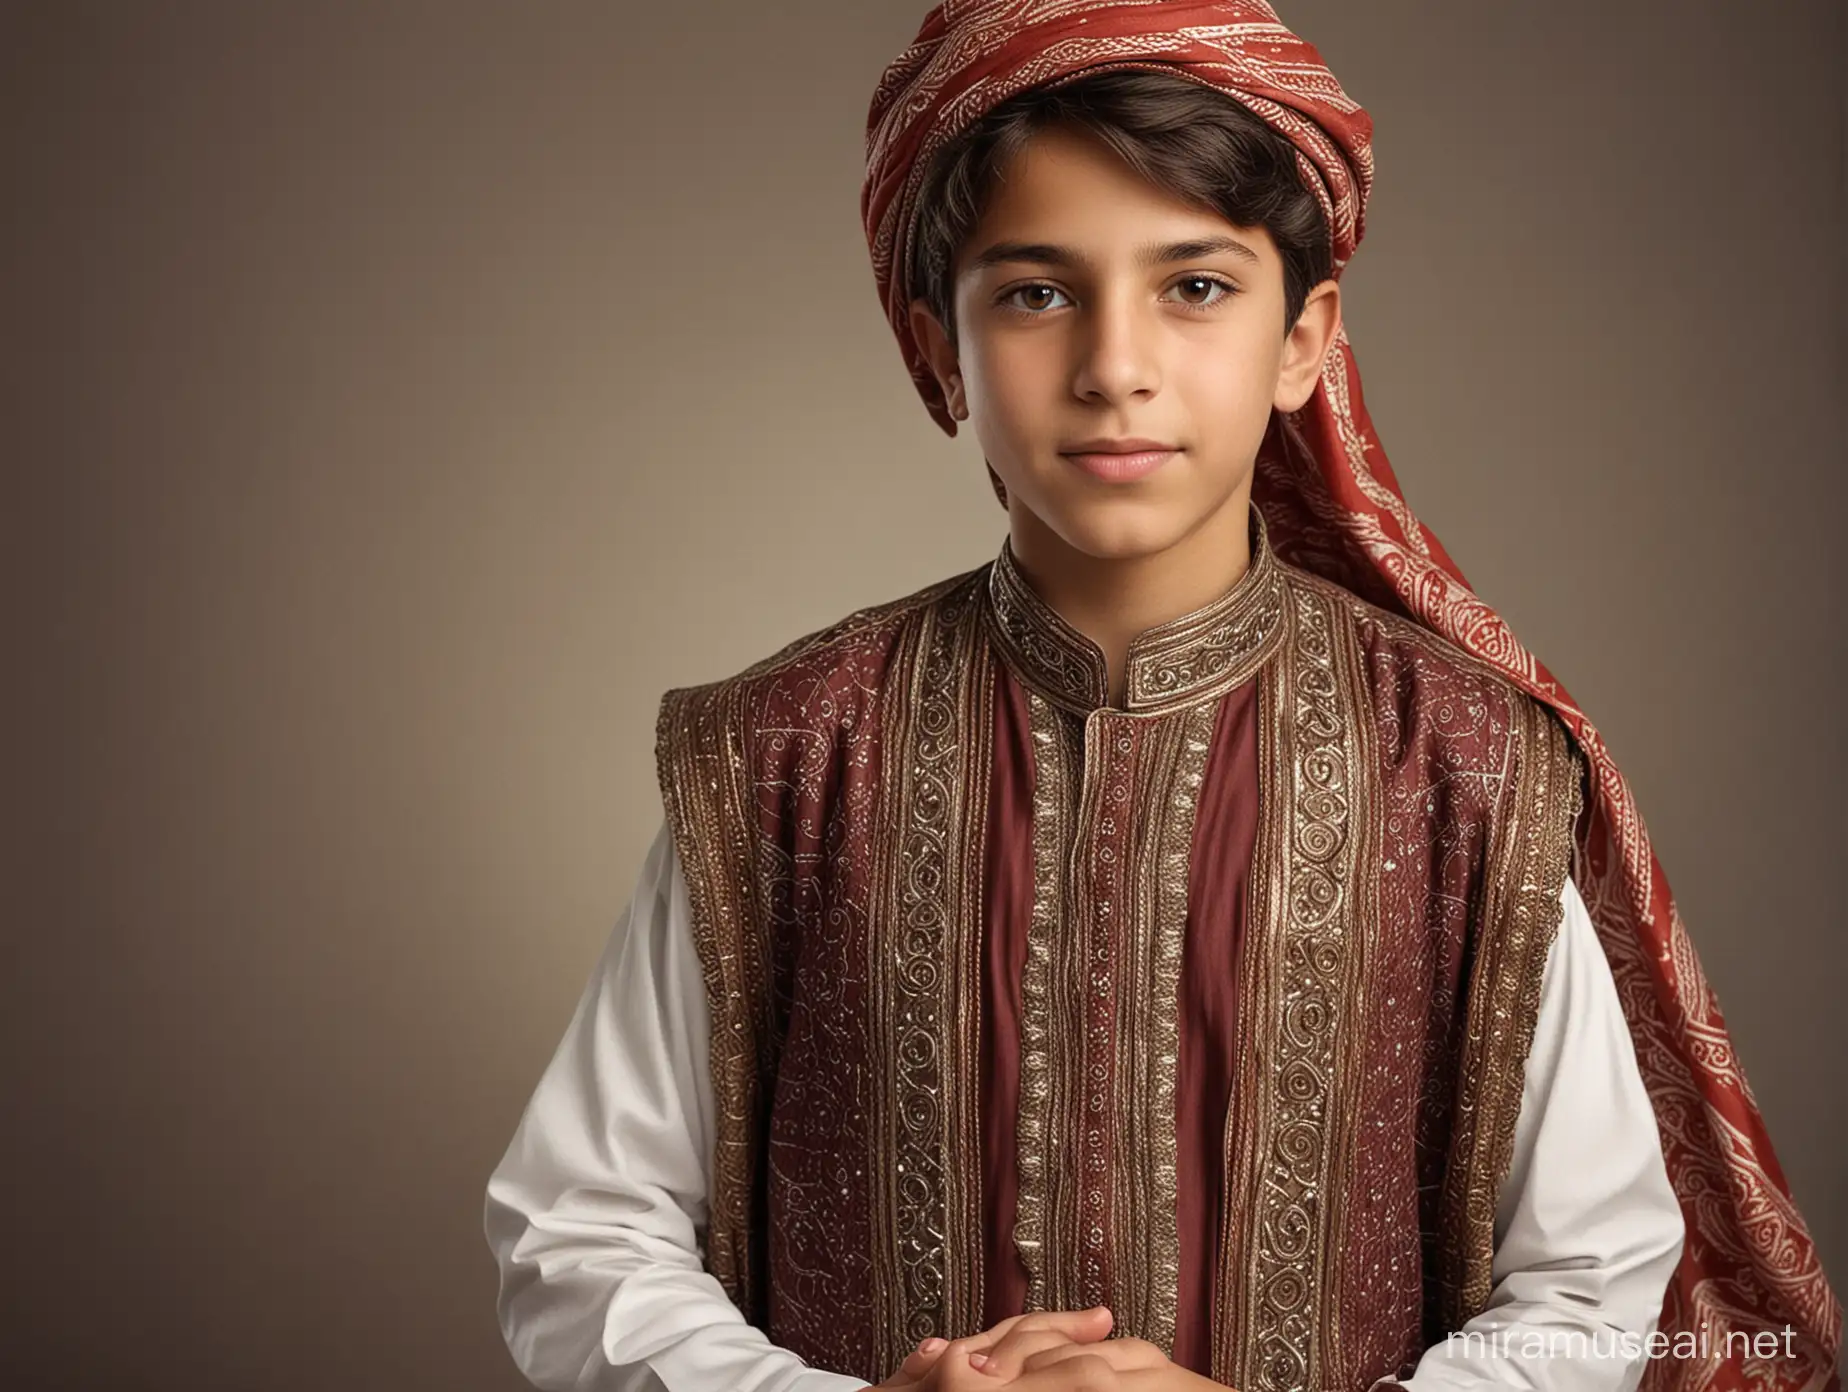 Elegantly Dressed 13YearOld Arab Boy in Realistic Photo